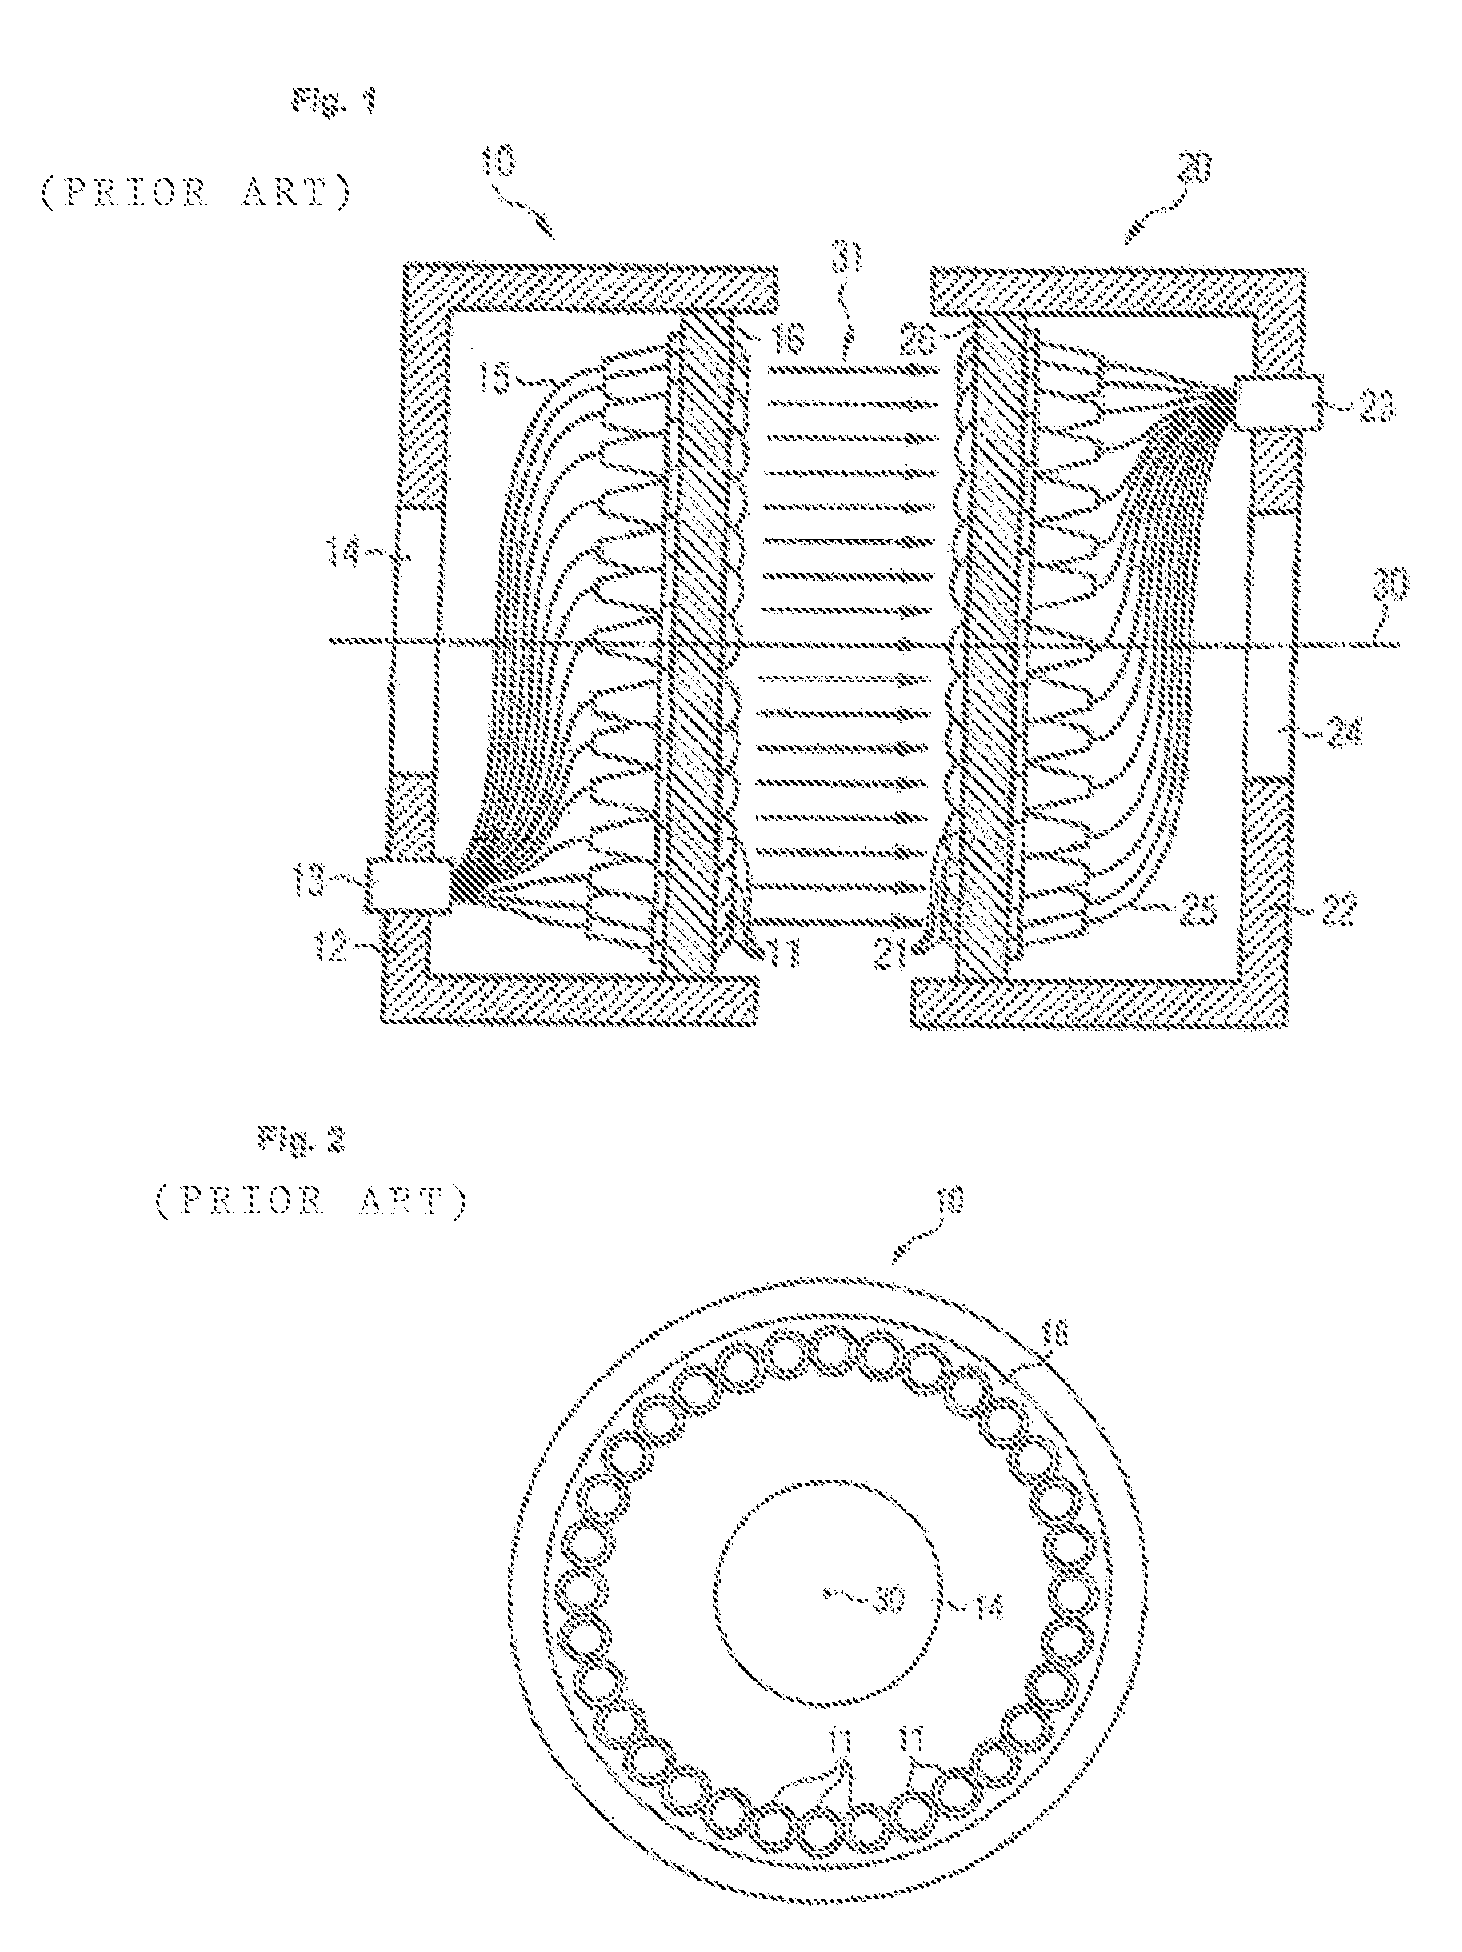 Optical rotary transmitter